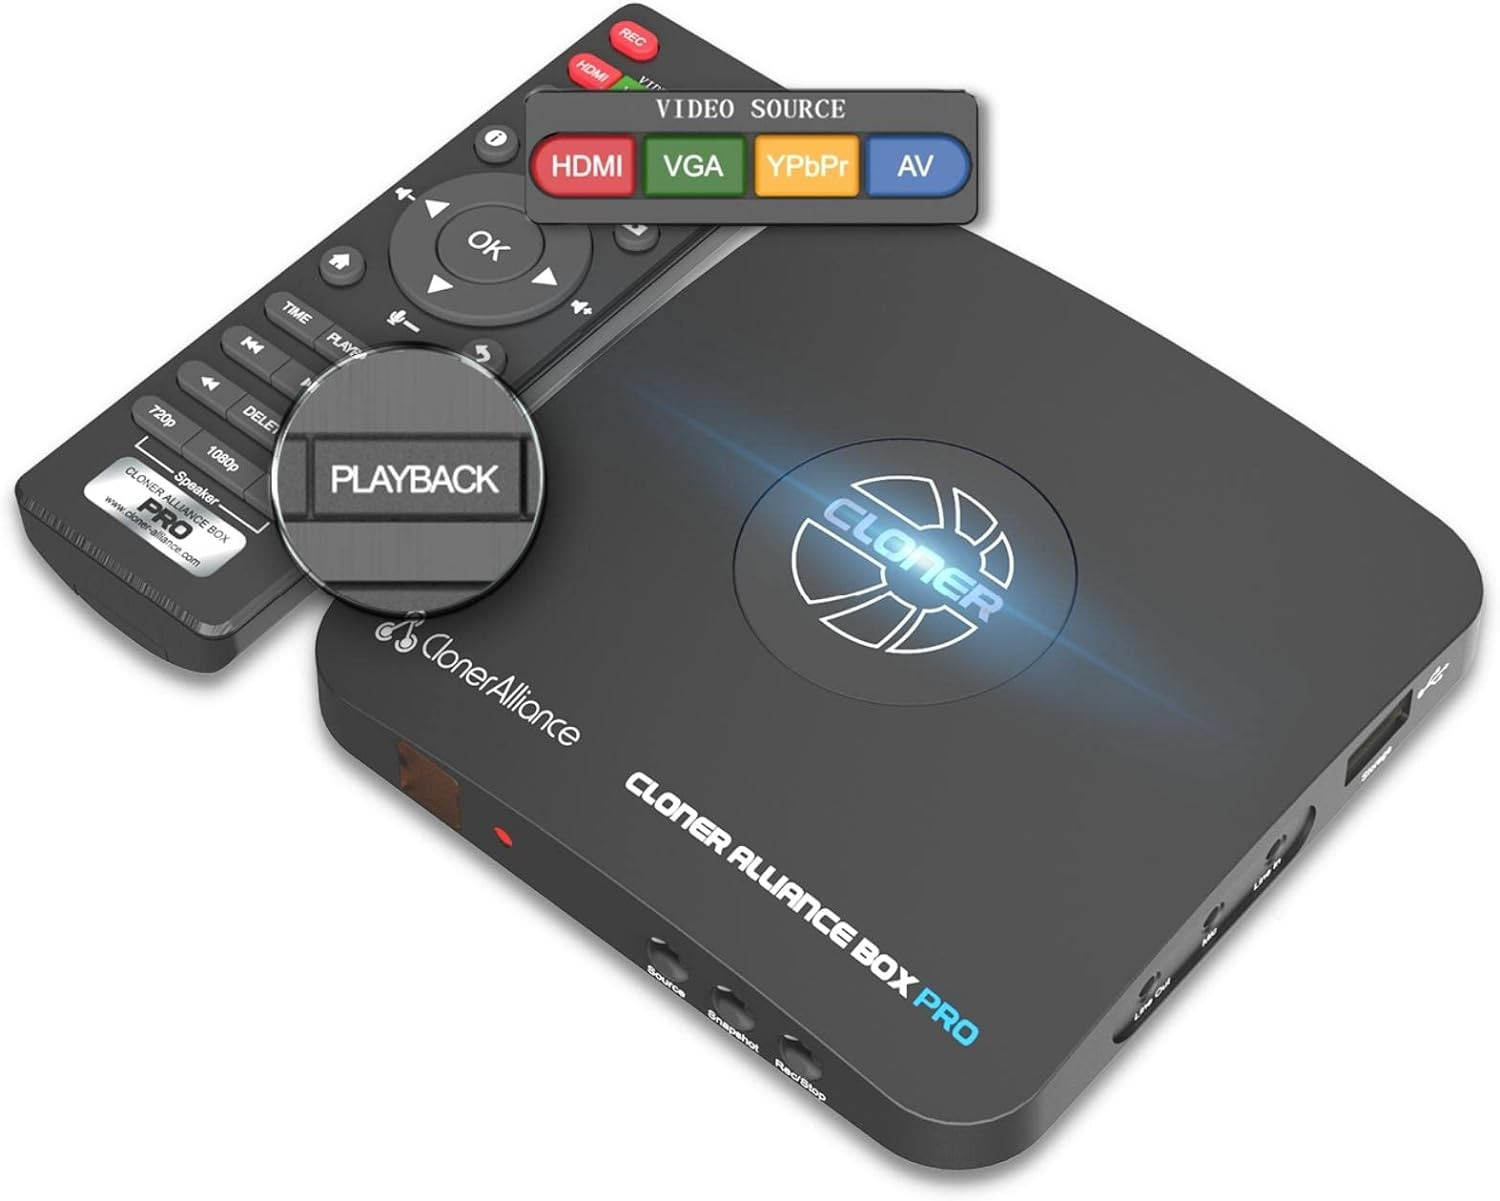 Video Recorder DVR HDMI Capture TV Playback RCA/YPBPR/VGA to Digital Converter